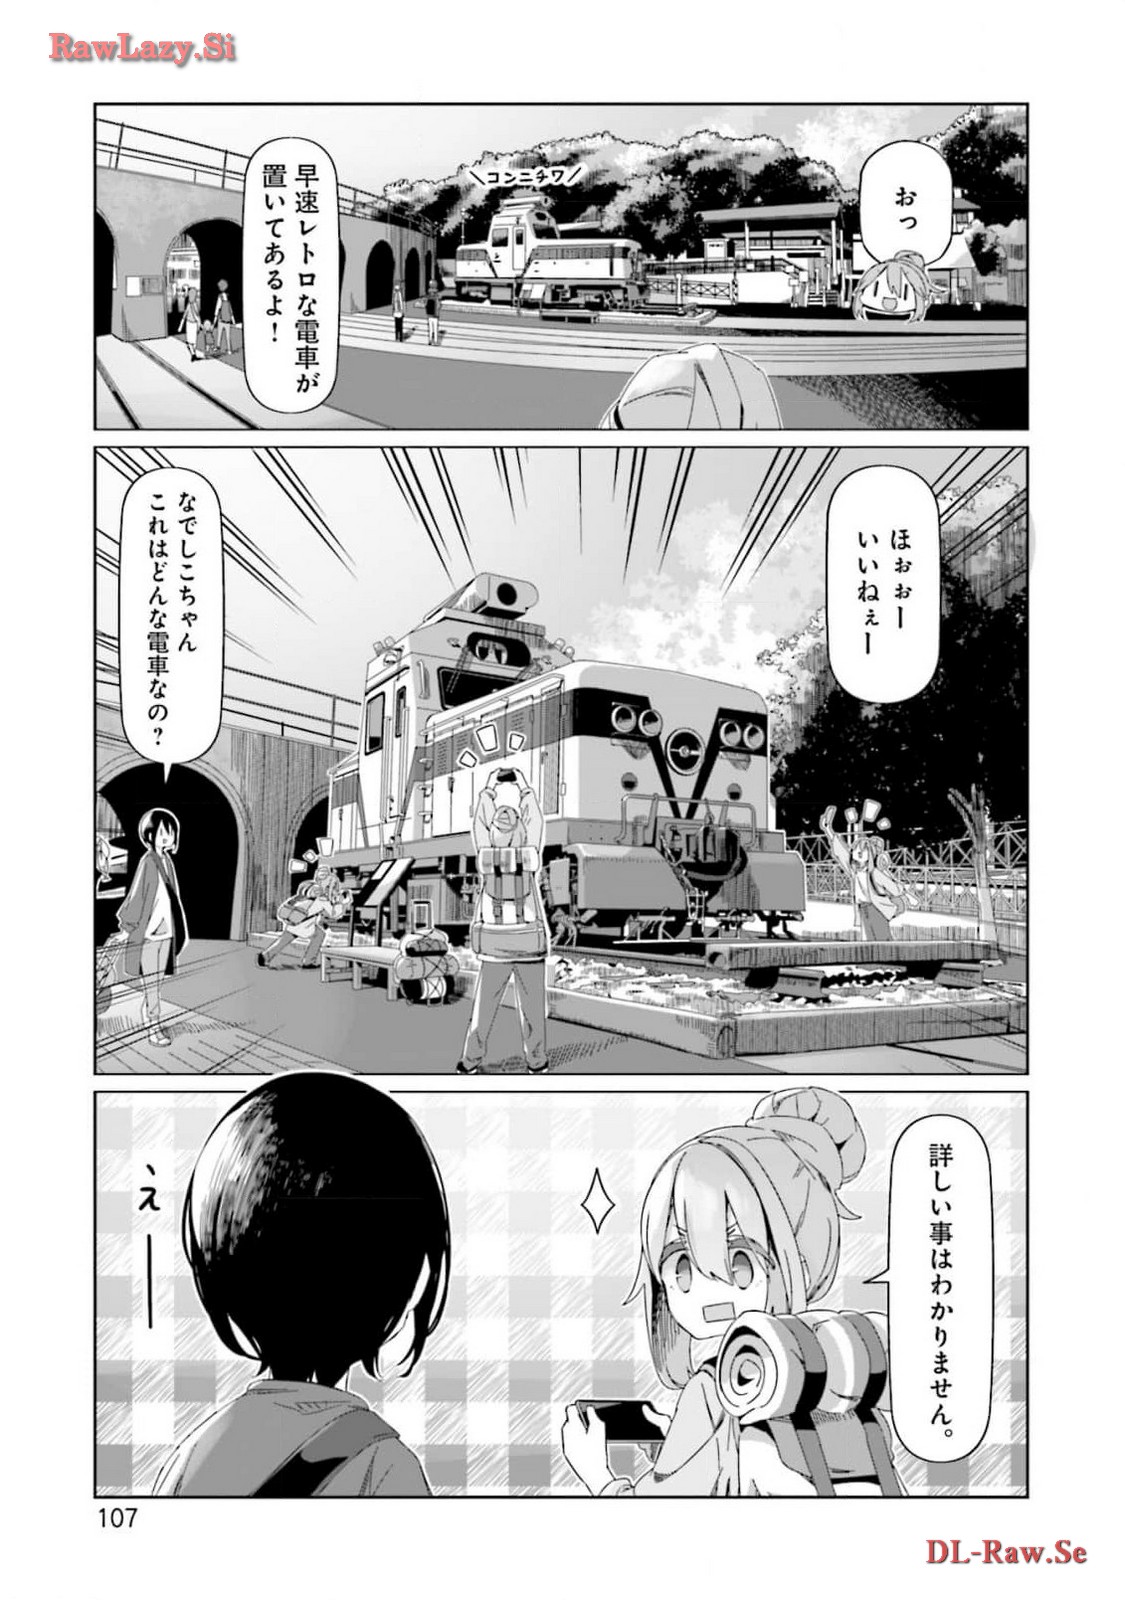 Yuru Camp - Chapter 92 - Page 1